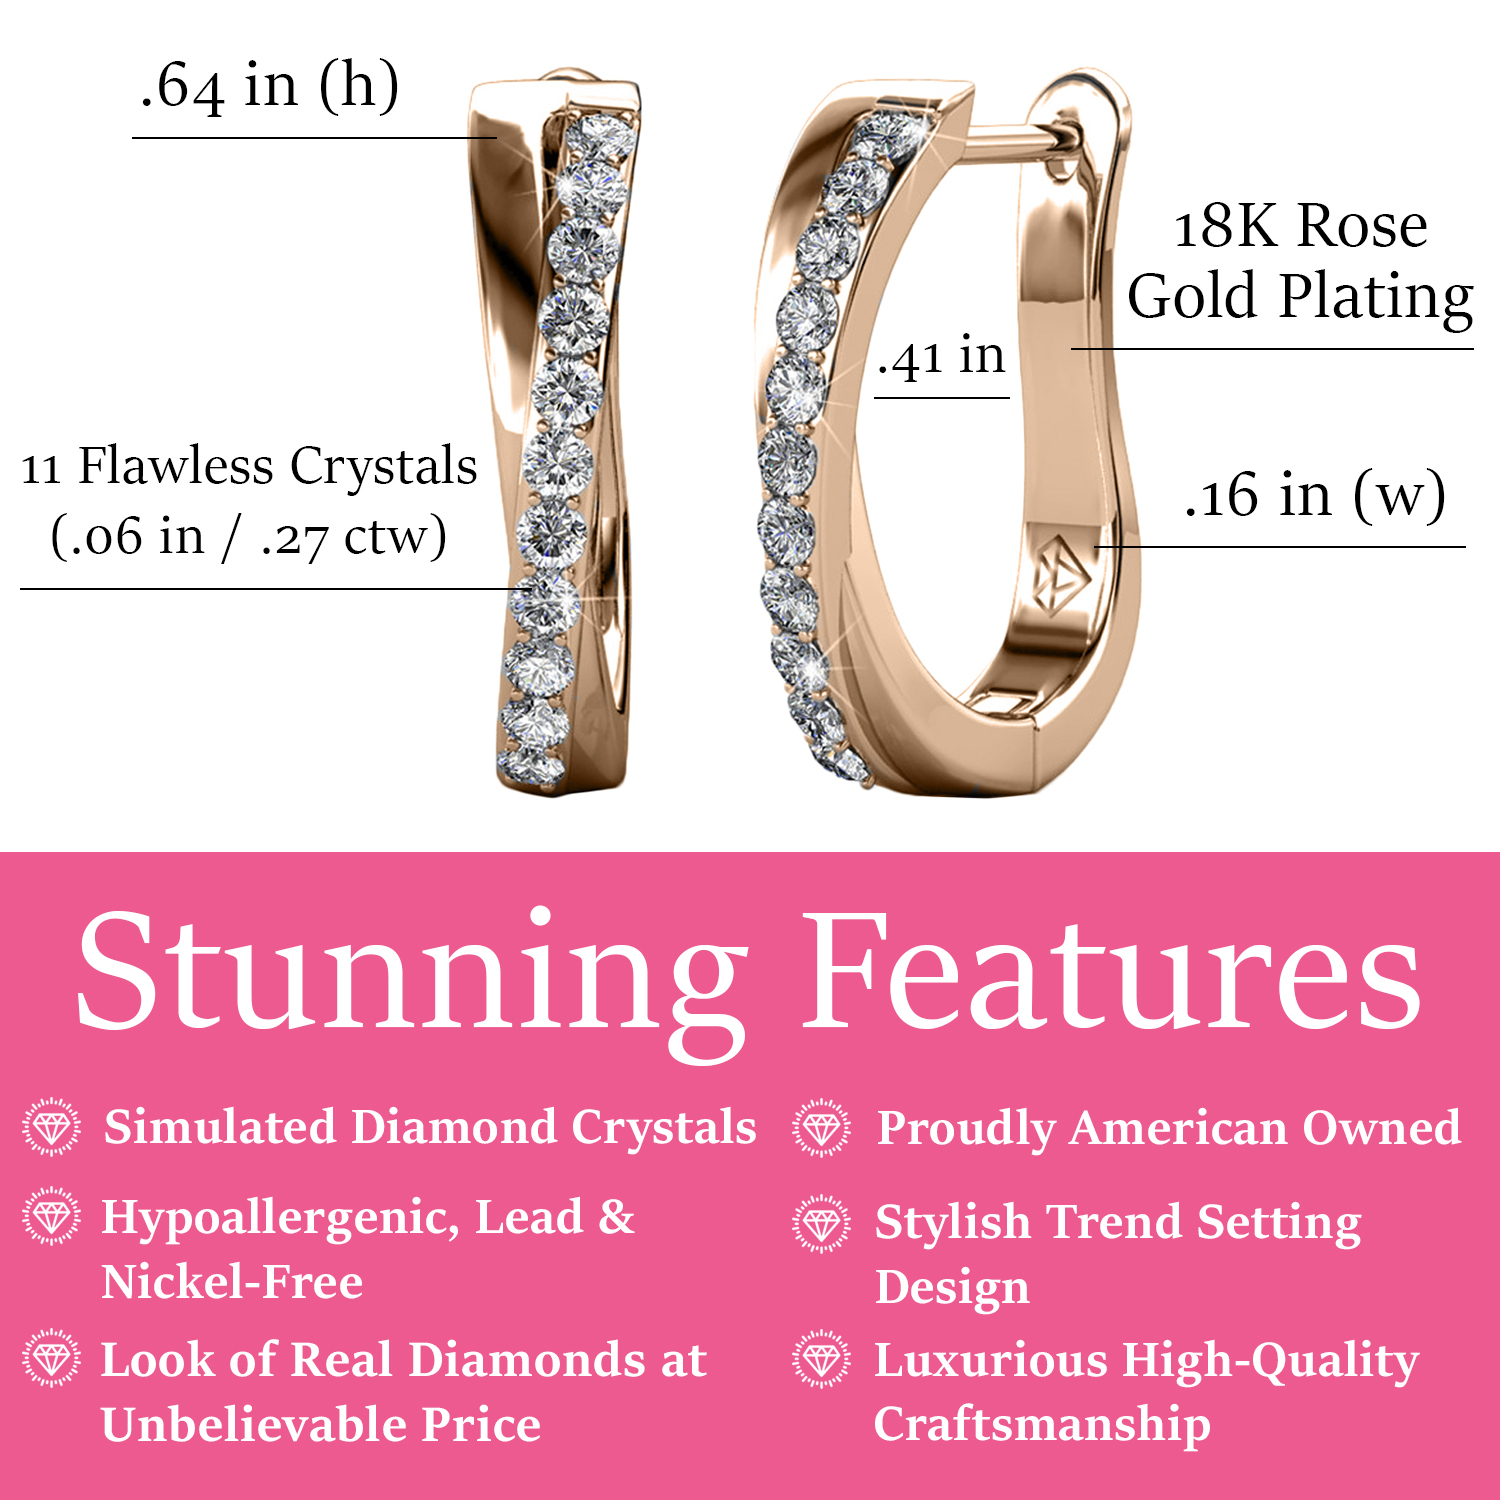 Cate & Chloe Amaya 18k Rose Gold Plated Hoop Earrings | Women's Crystal Earrings, Jewelry Gift for Her - image 5 of 9